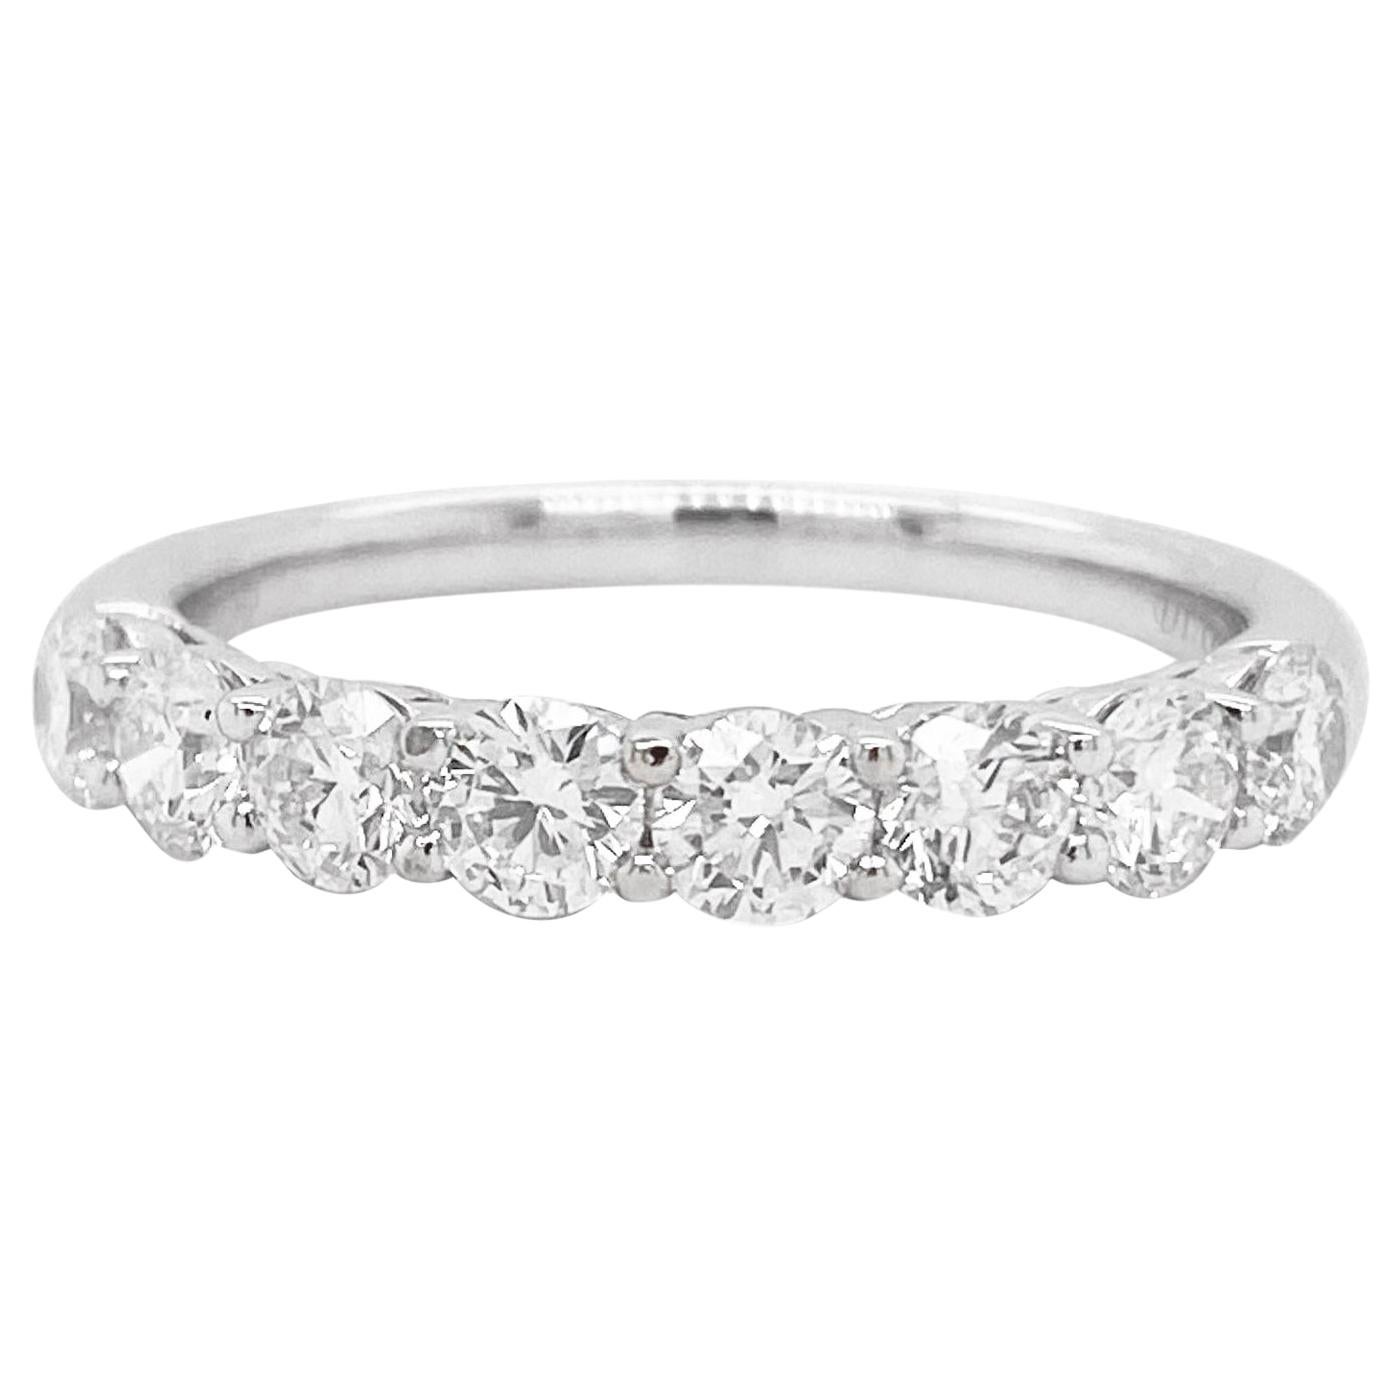 Diamond Band Ring, 1.11 Carat Round Diamond, Wedding Band, Stackable